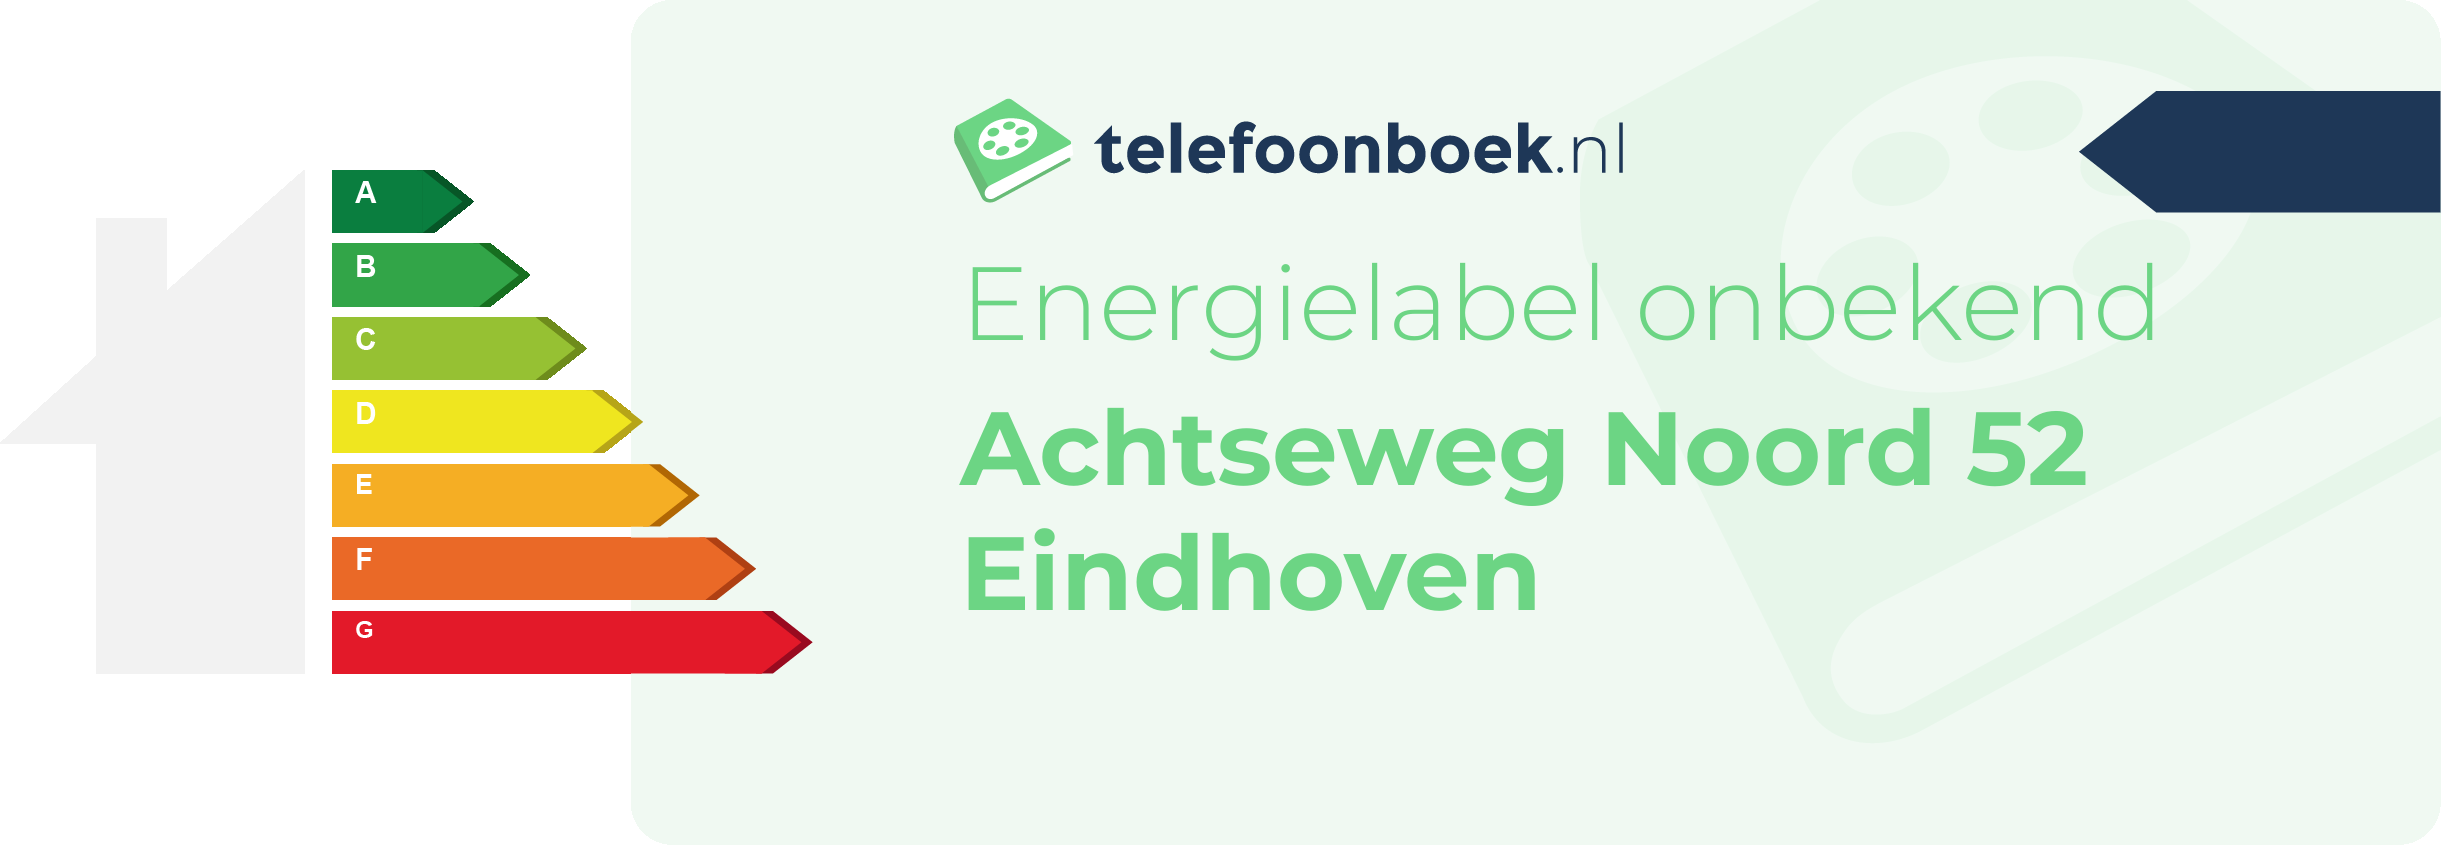 Energielabel Achtseweg Noord 52 Eindhoven